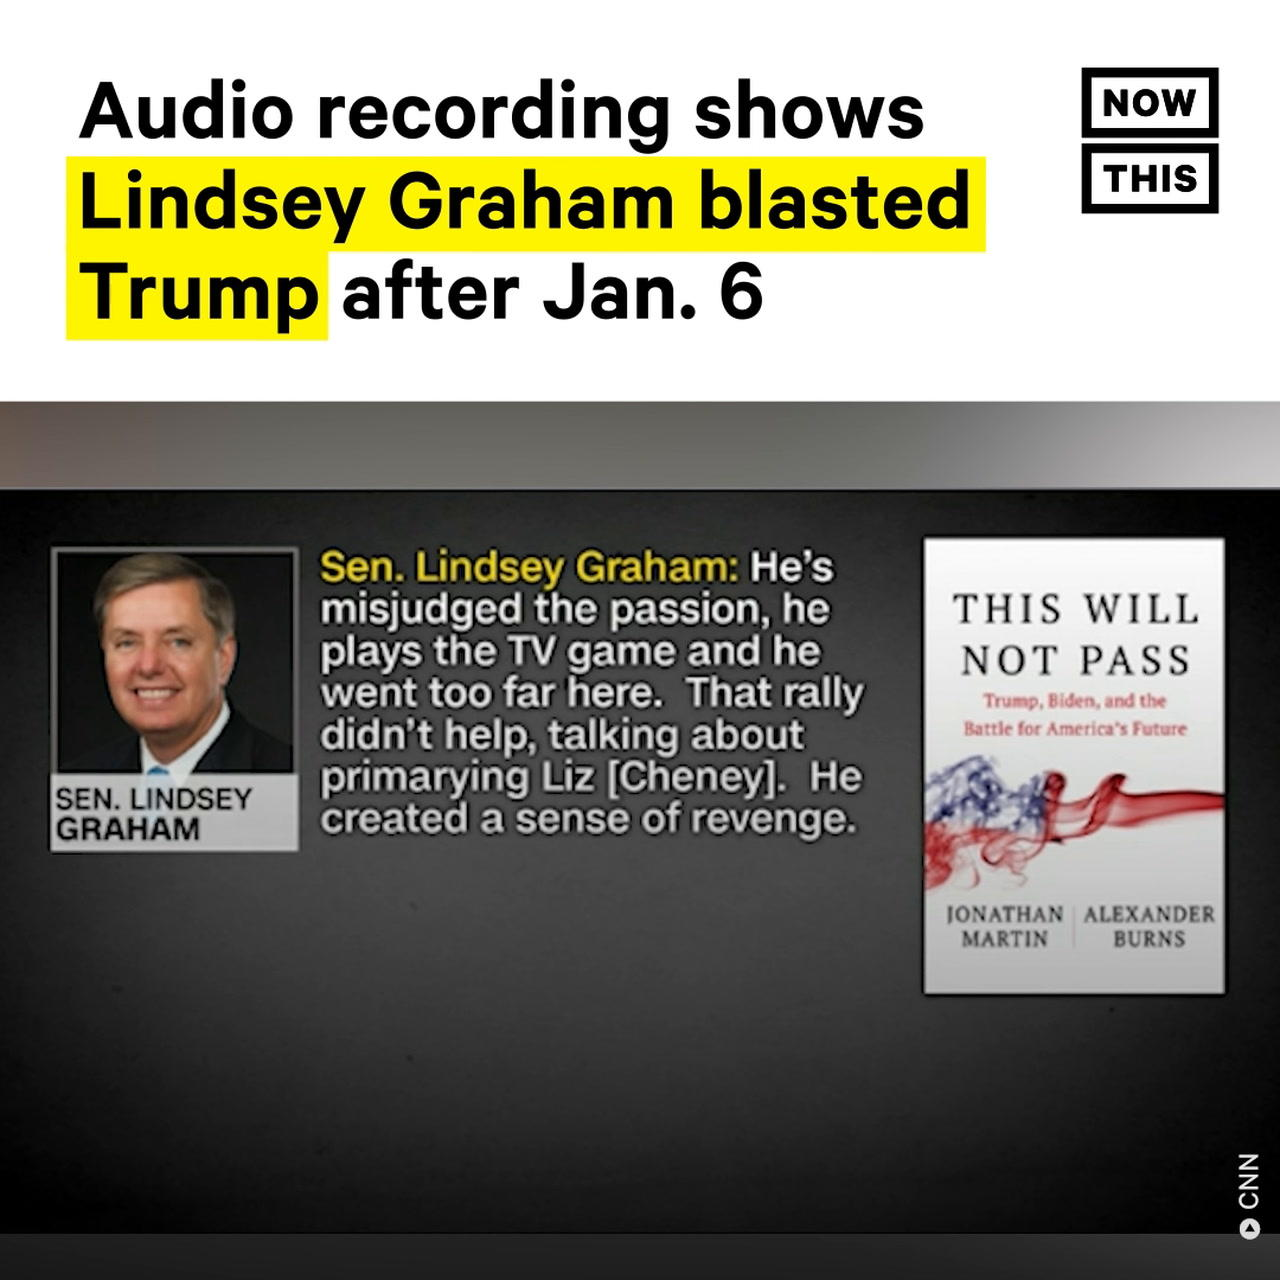 Lindsey Graham Slams Trump in Audio Recording After Jan 6